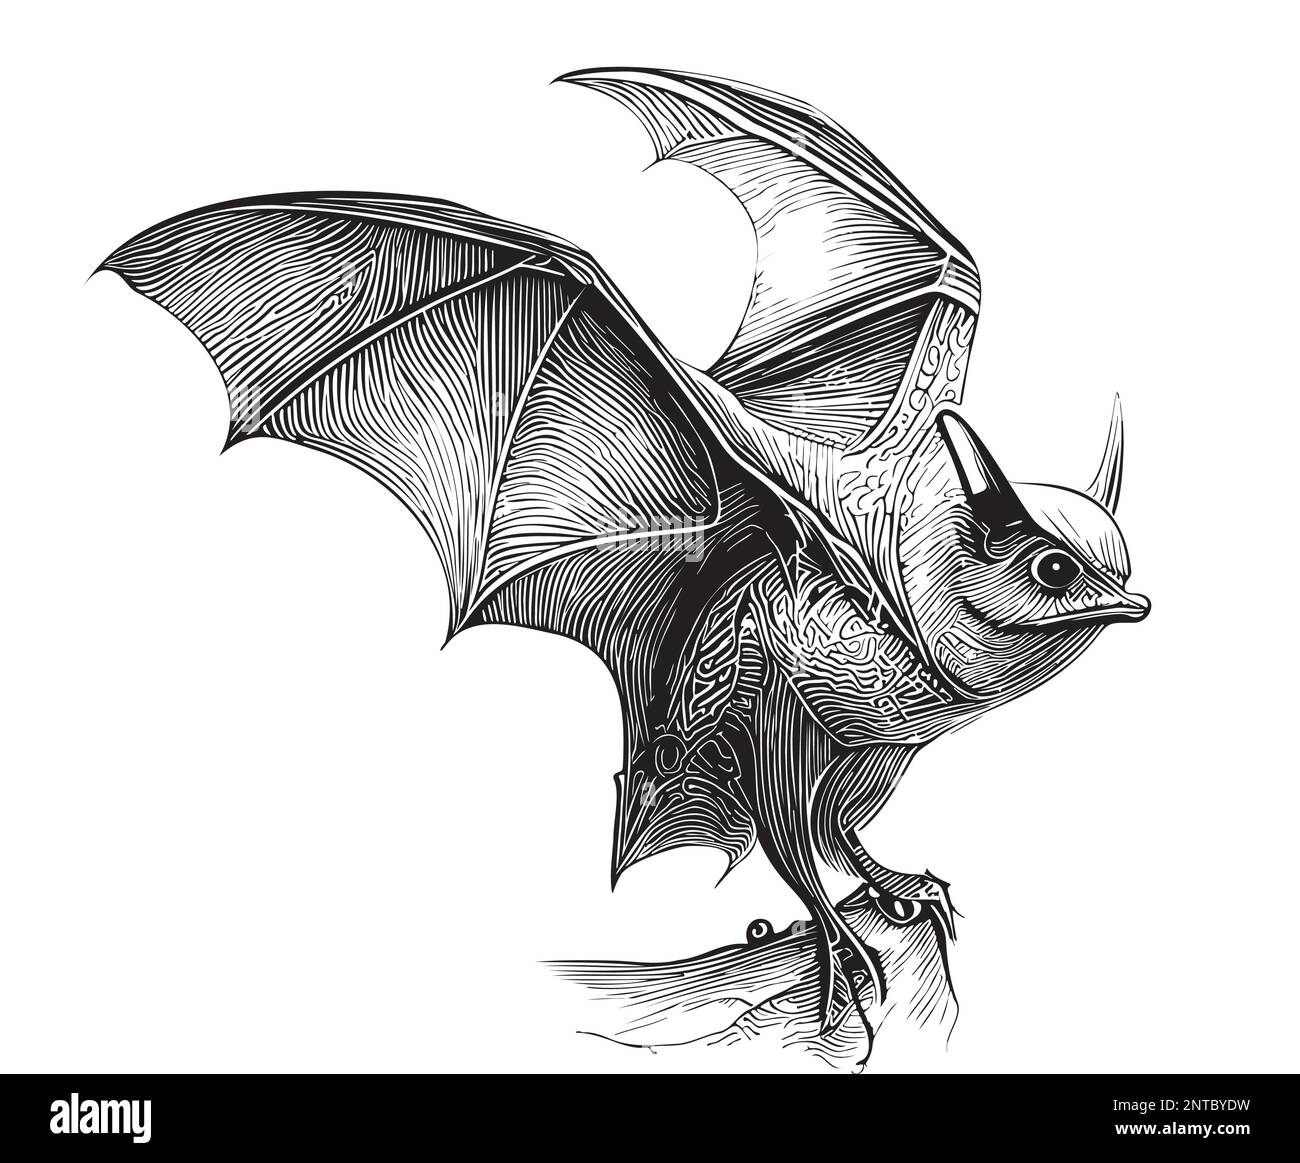 Bat flying hand drawn sketch Vector illustration Halloween Stock Vector